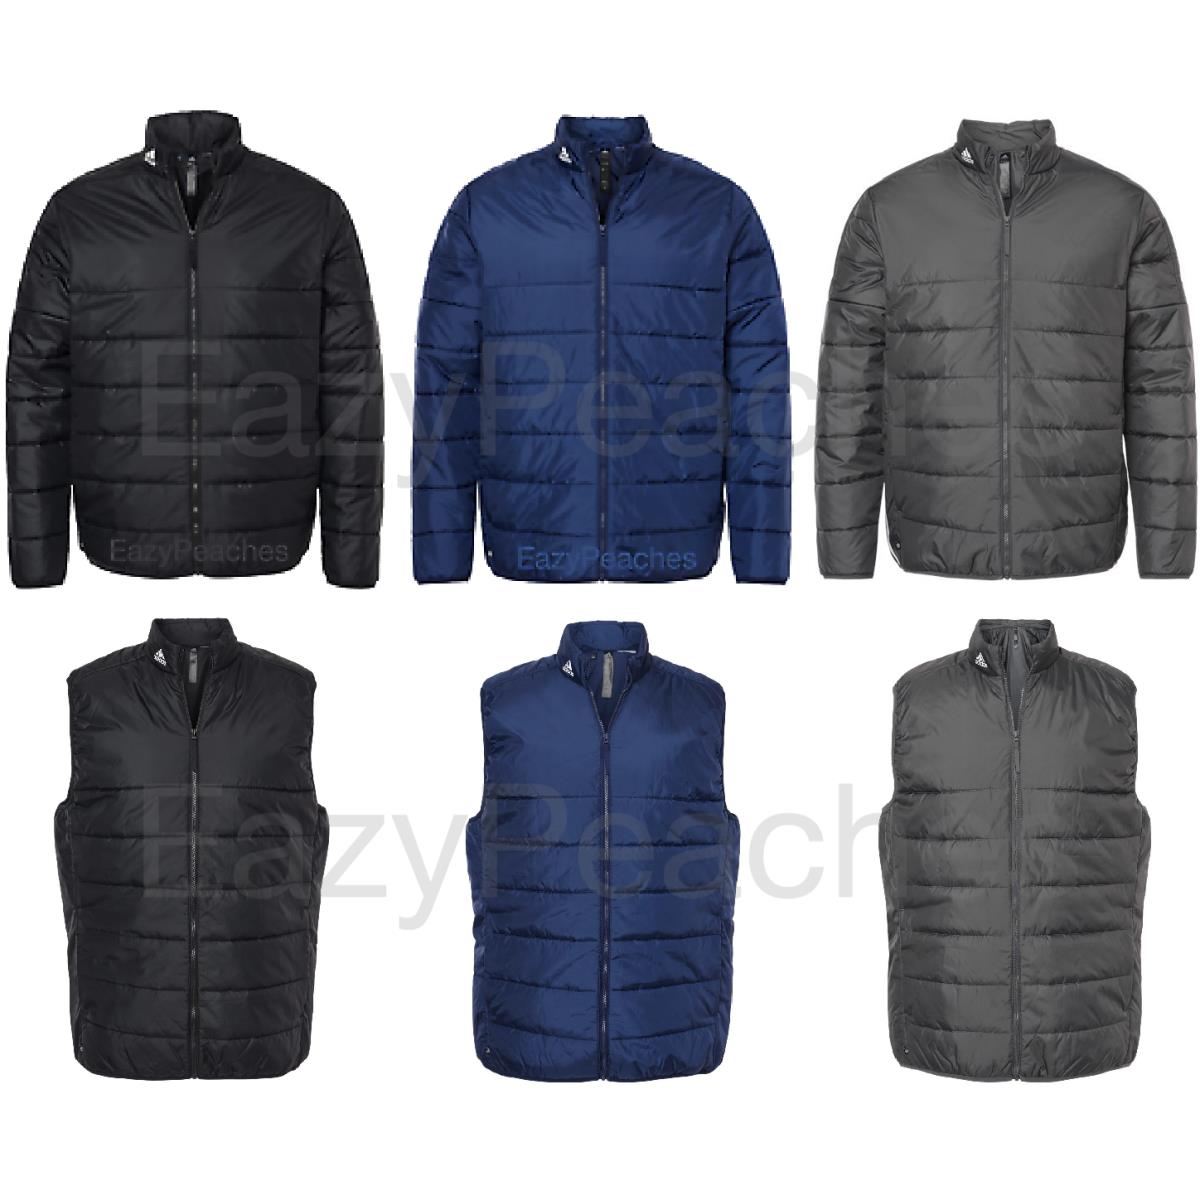 Adidas Men`s S-4XL 3-Stripes Puffer Jacket or Vest Full-zip Insulated Coat - Black, Navy